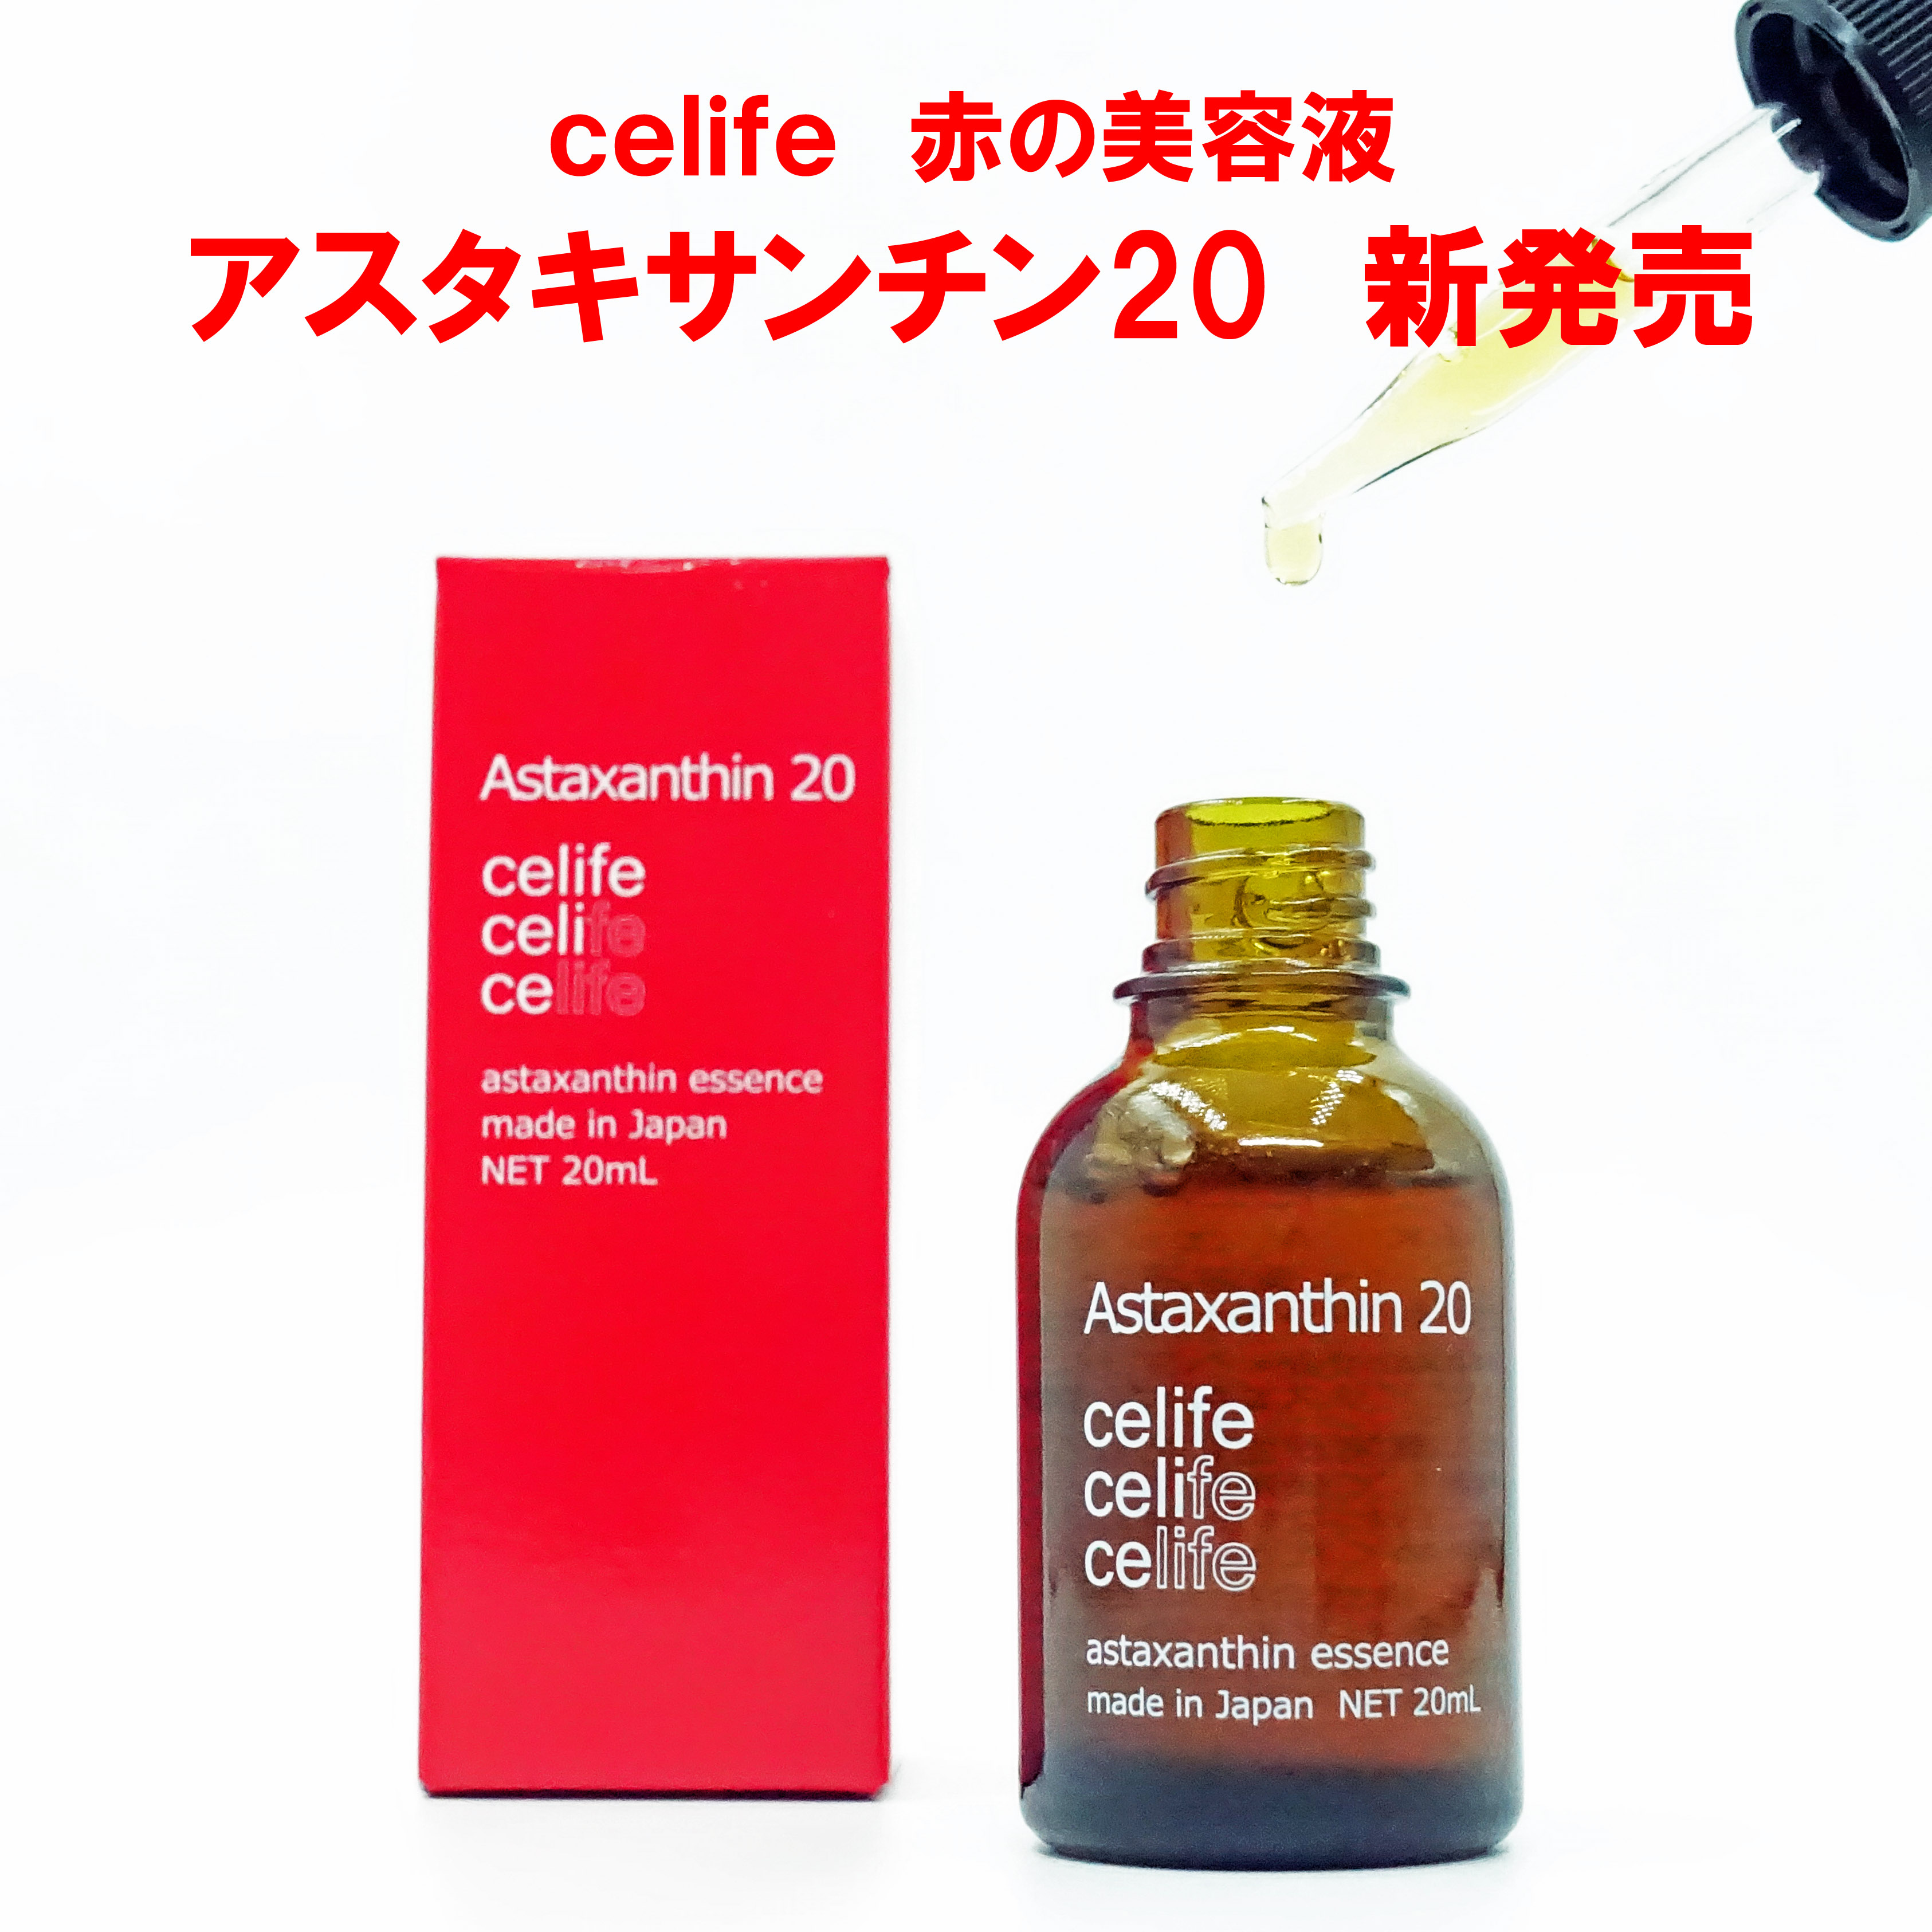 celifeの新商品としてアスタキサンチン美容液が新発売